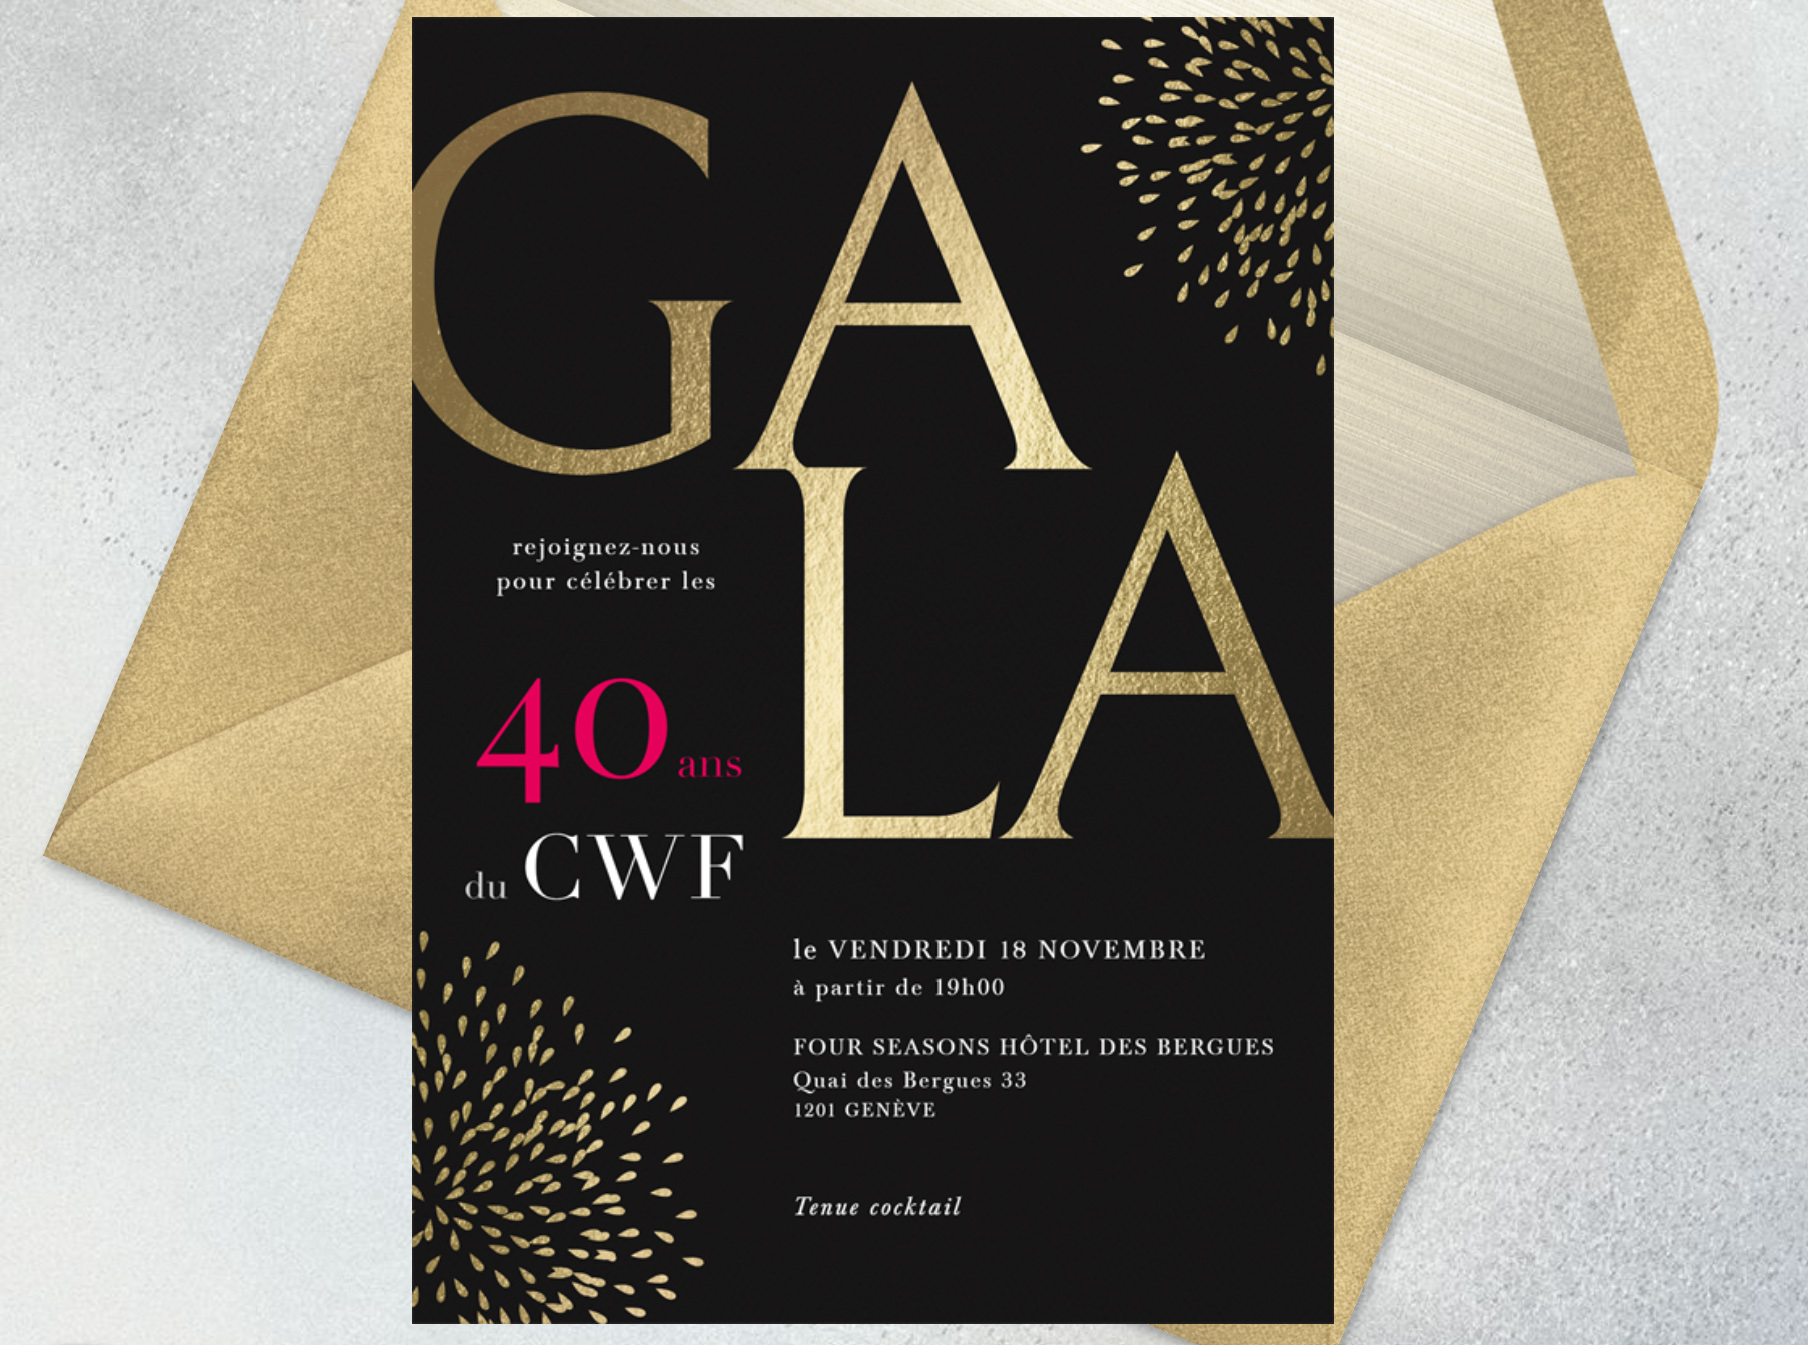 CWF 40th anniversary – GALA DINNER – CWF Official Website